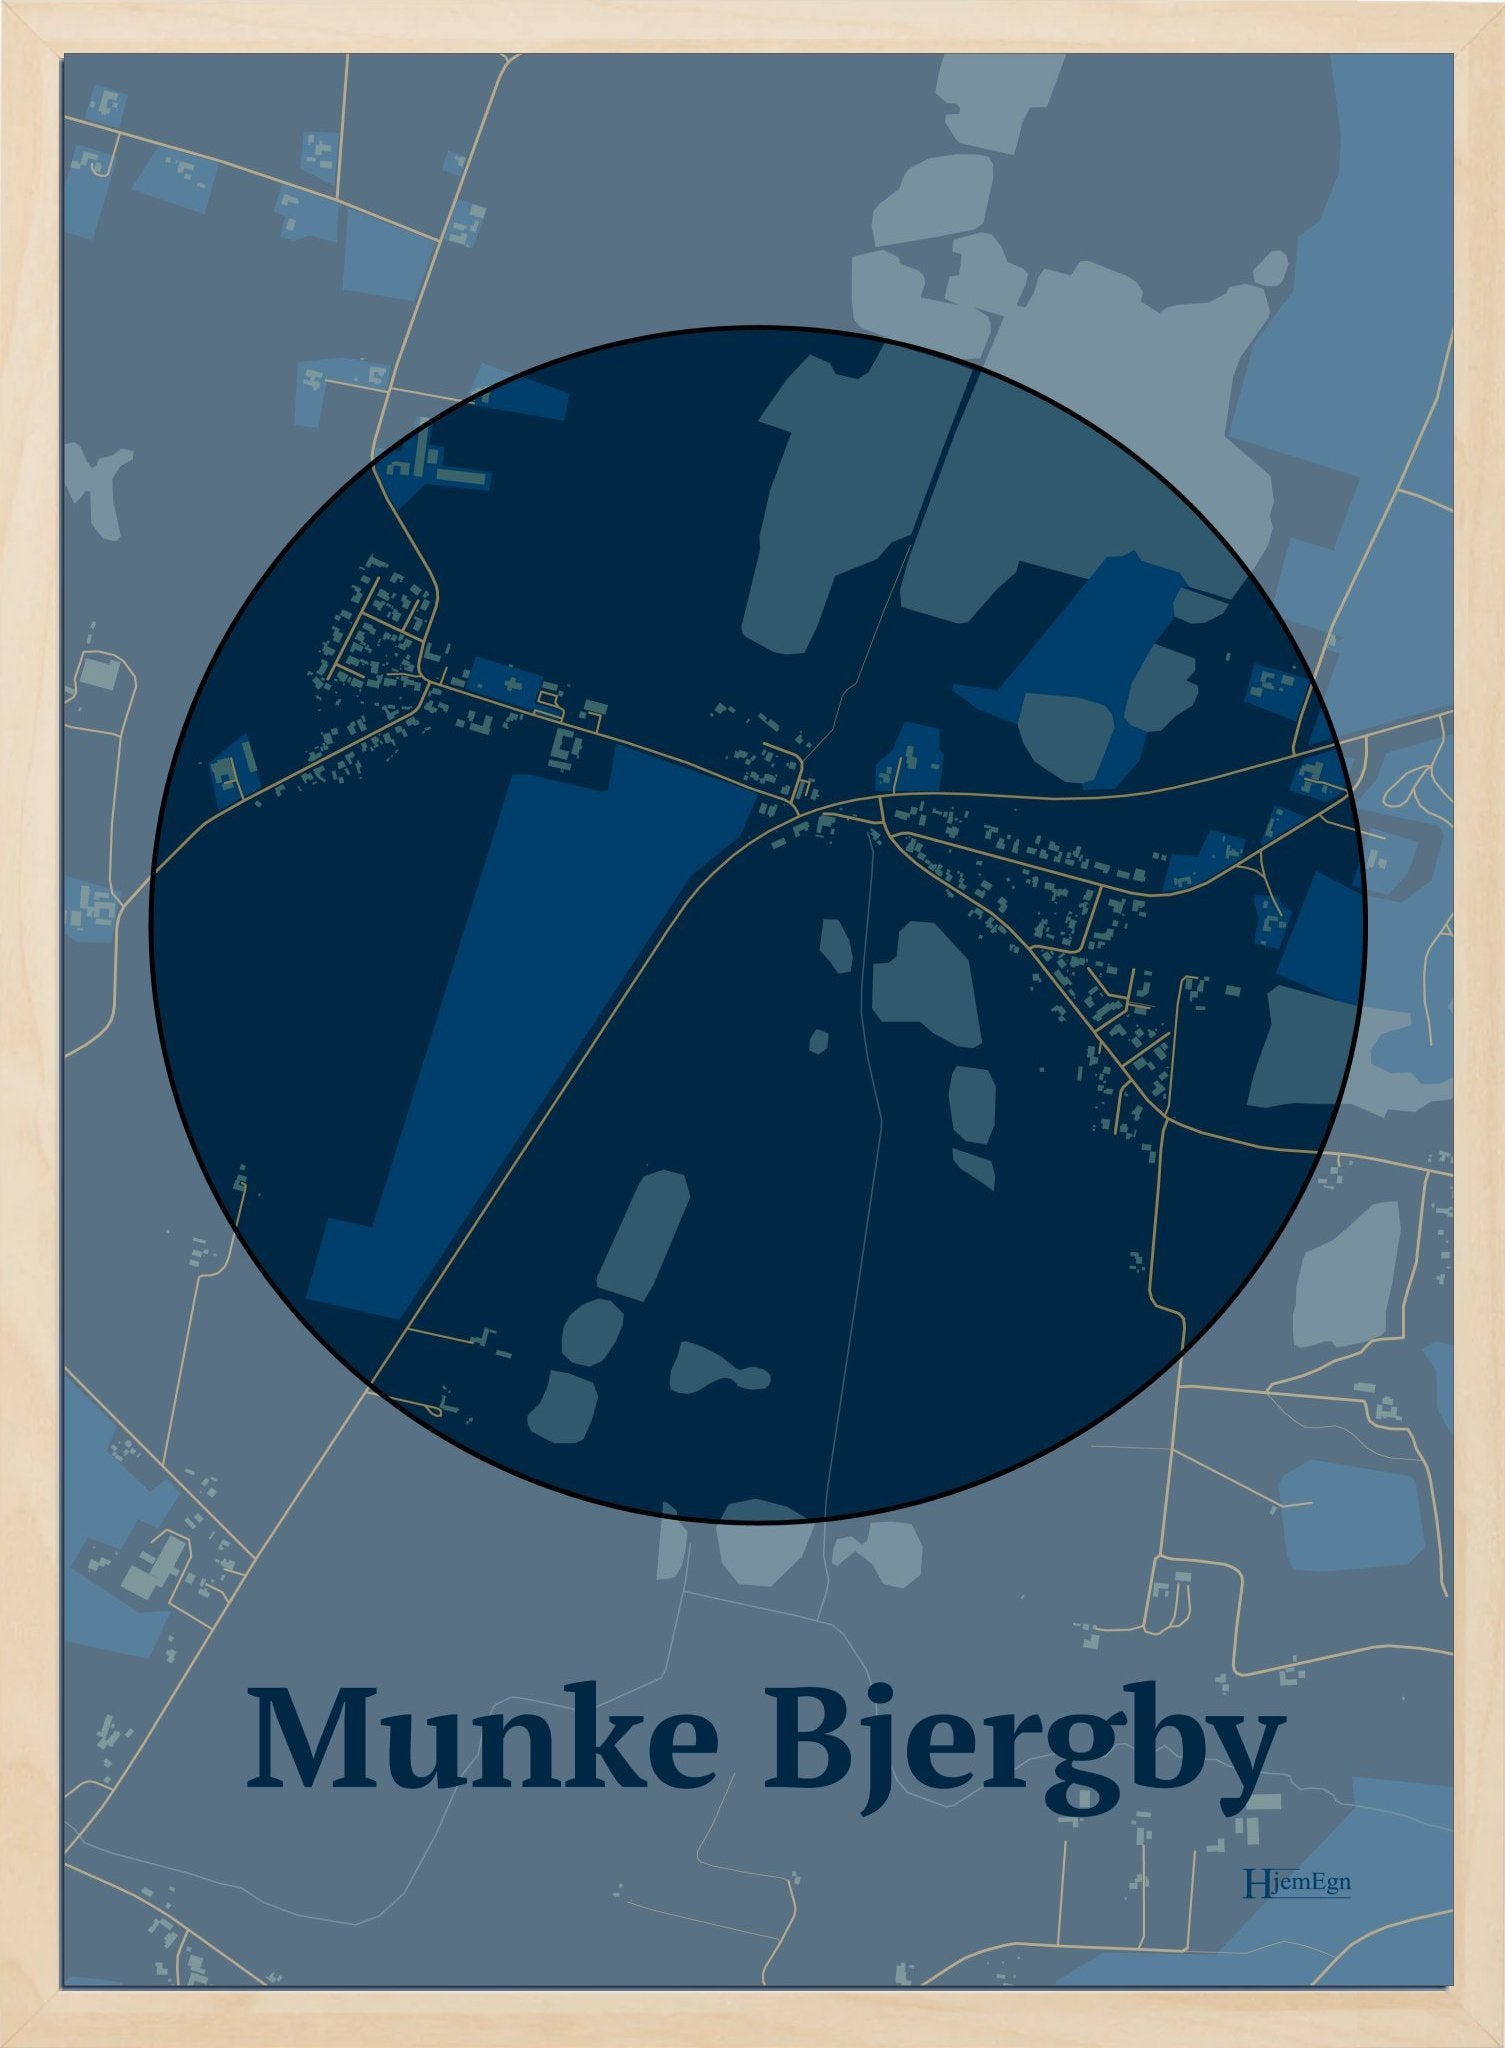 Munke Bjergby plakat i farve mørk blå og HjemEgn.dk design centrum. Design bykort for Munke Bjergby